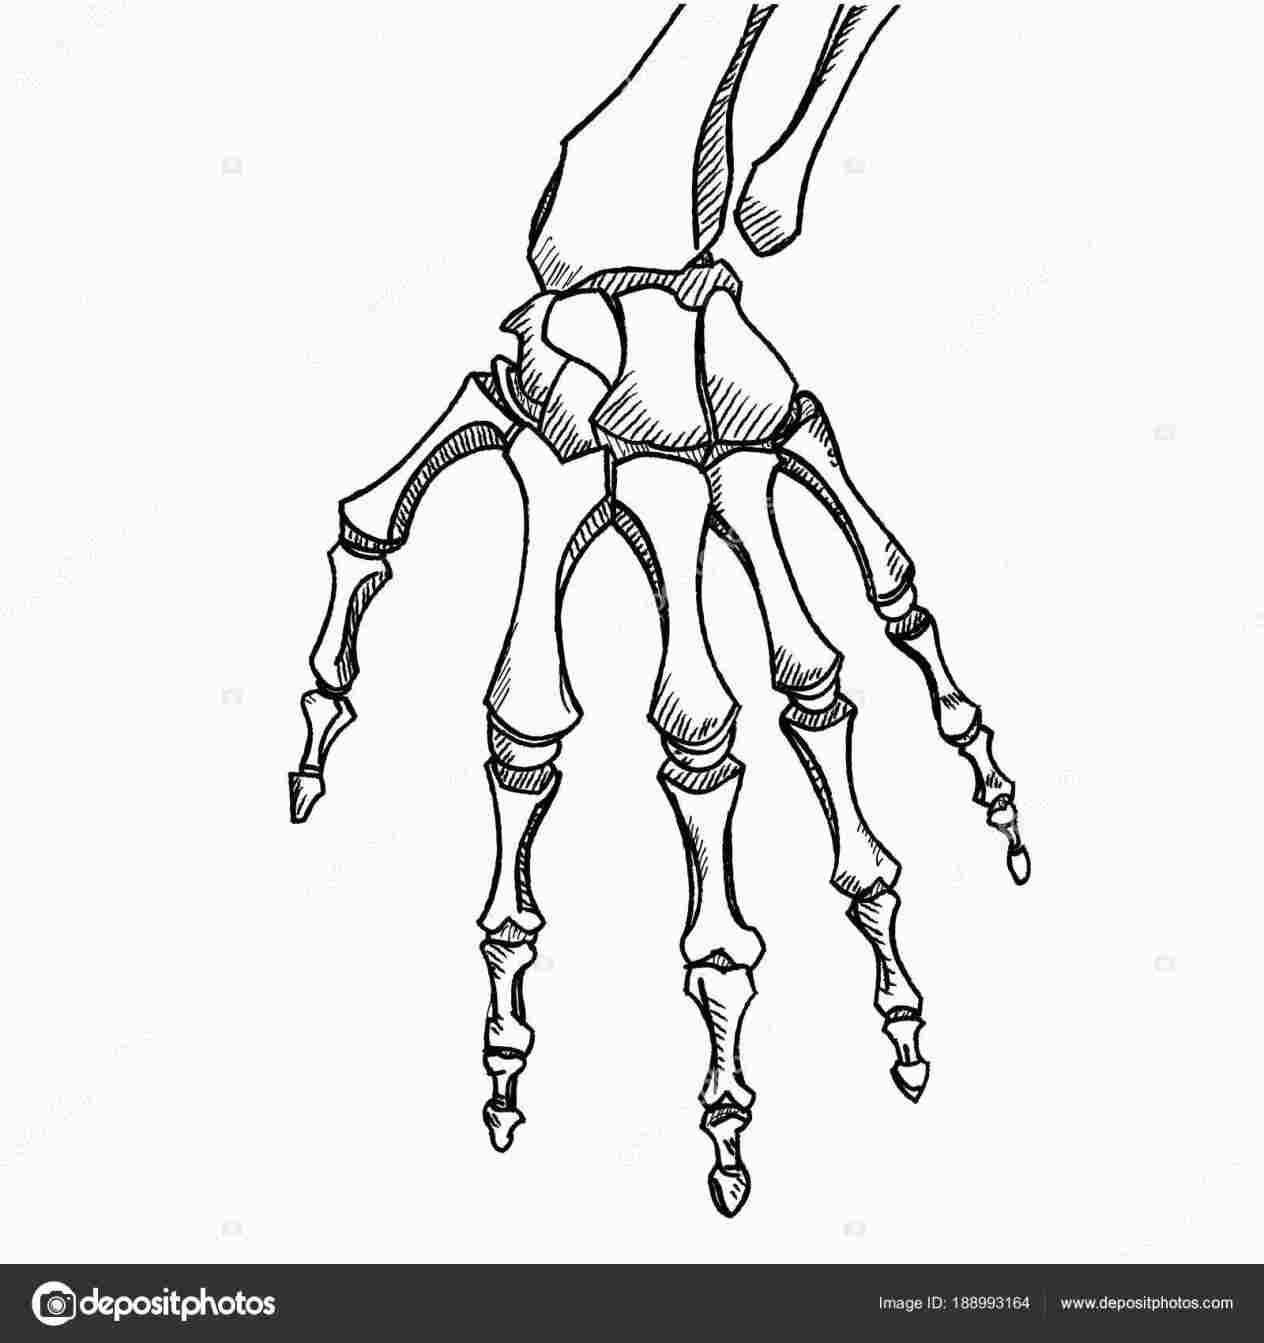 Skeleton Hand Drawing Tutorial at Explore